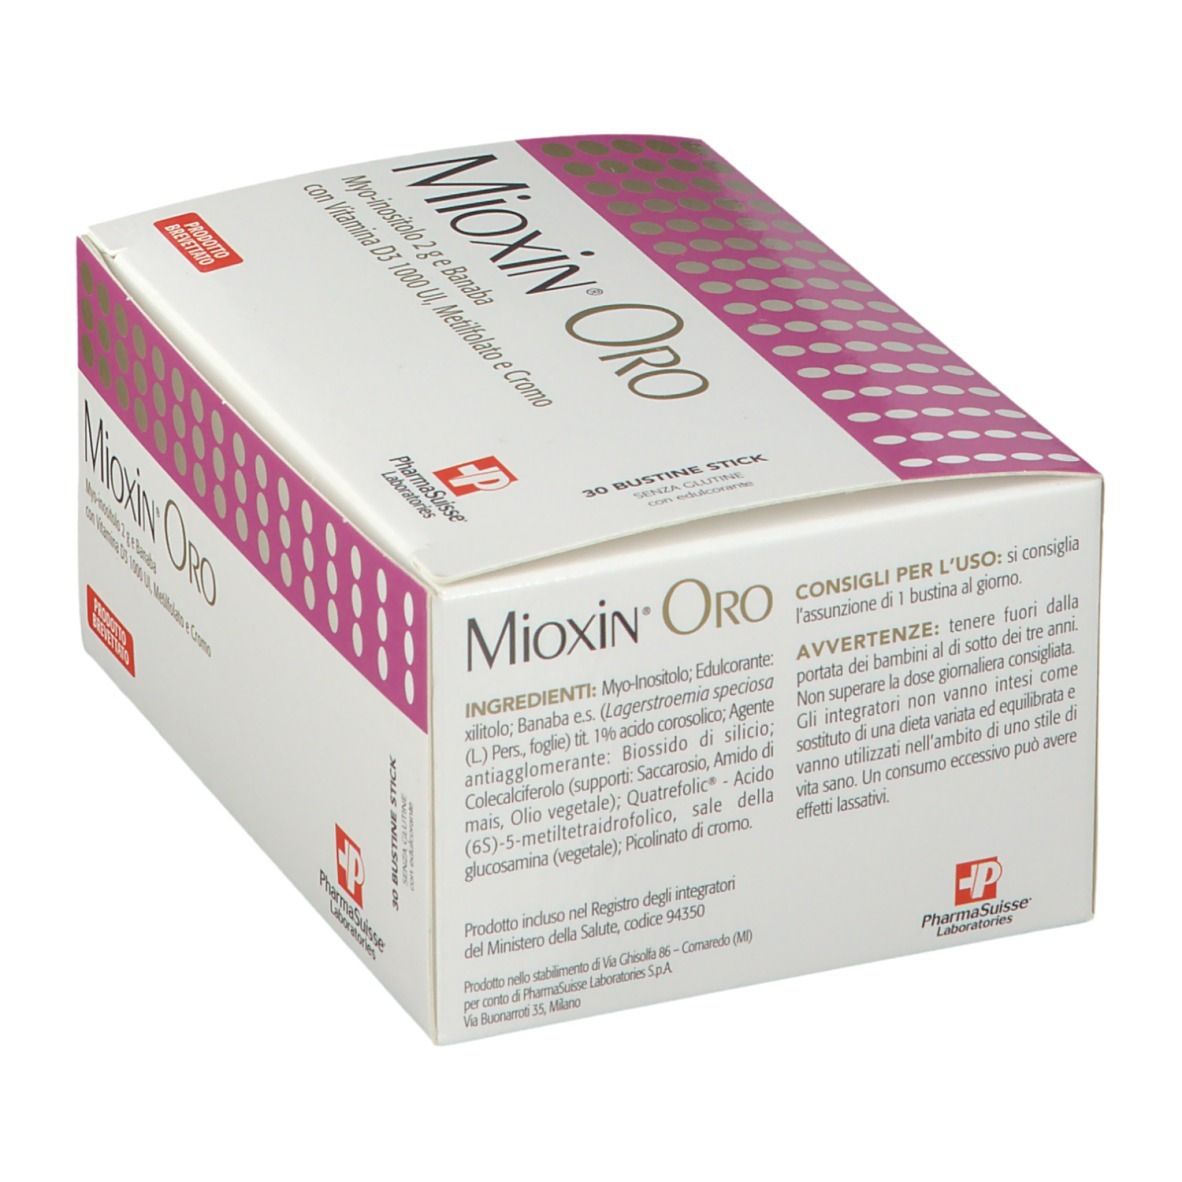 PharmaSuisse Mioxin® Oro